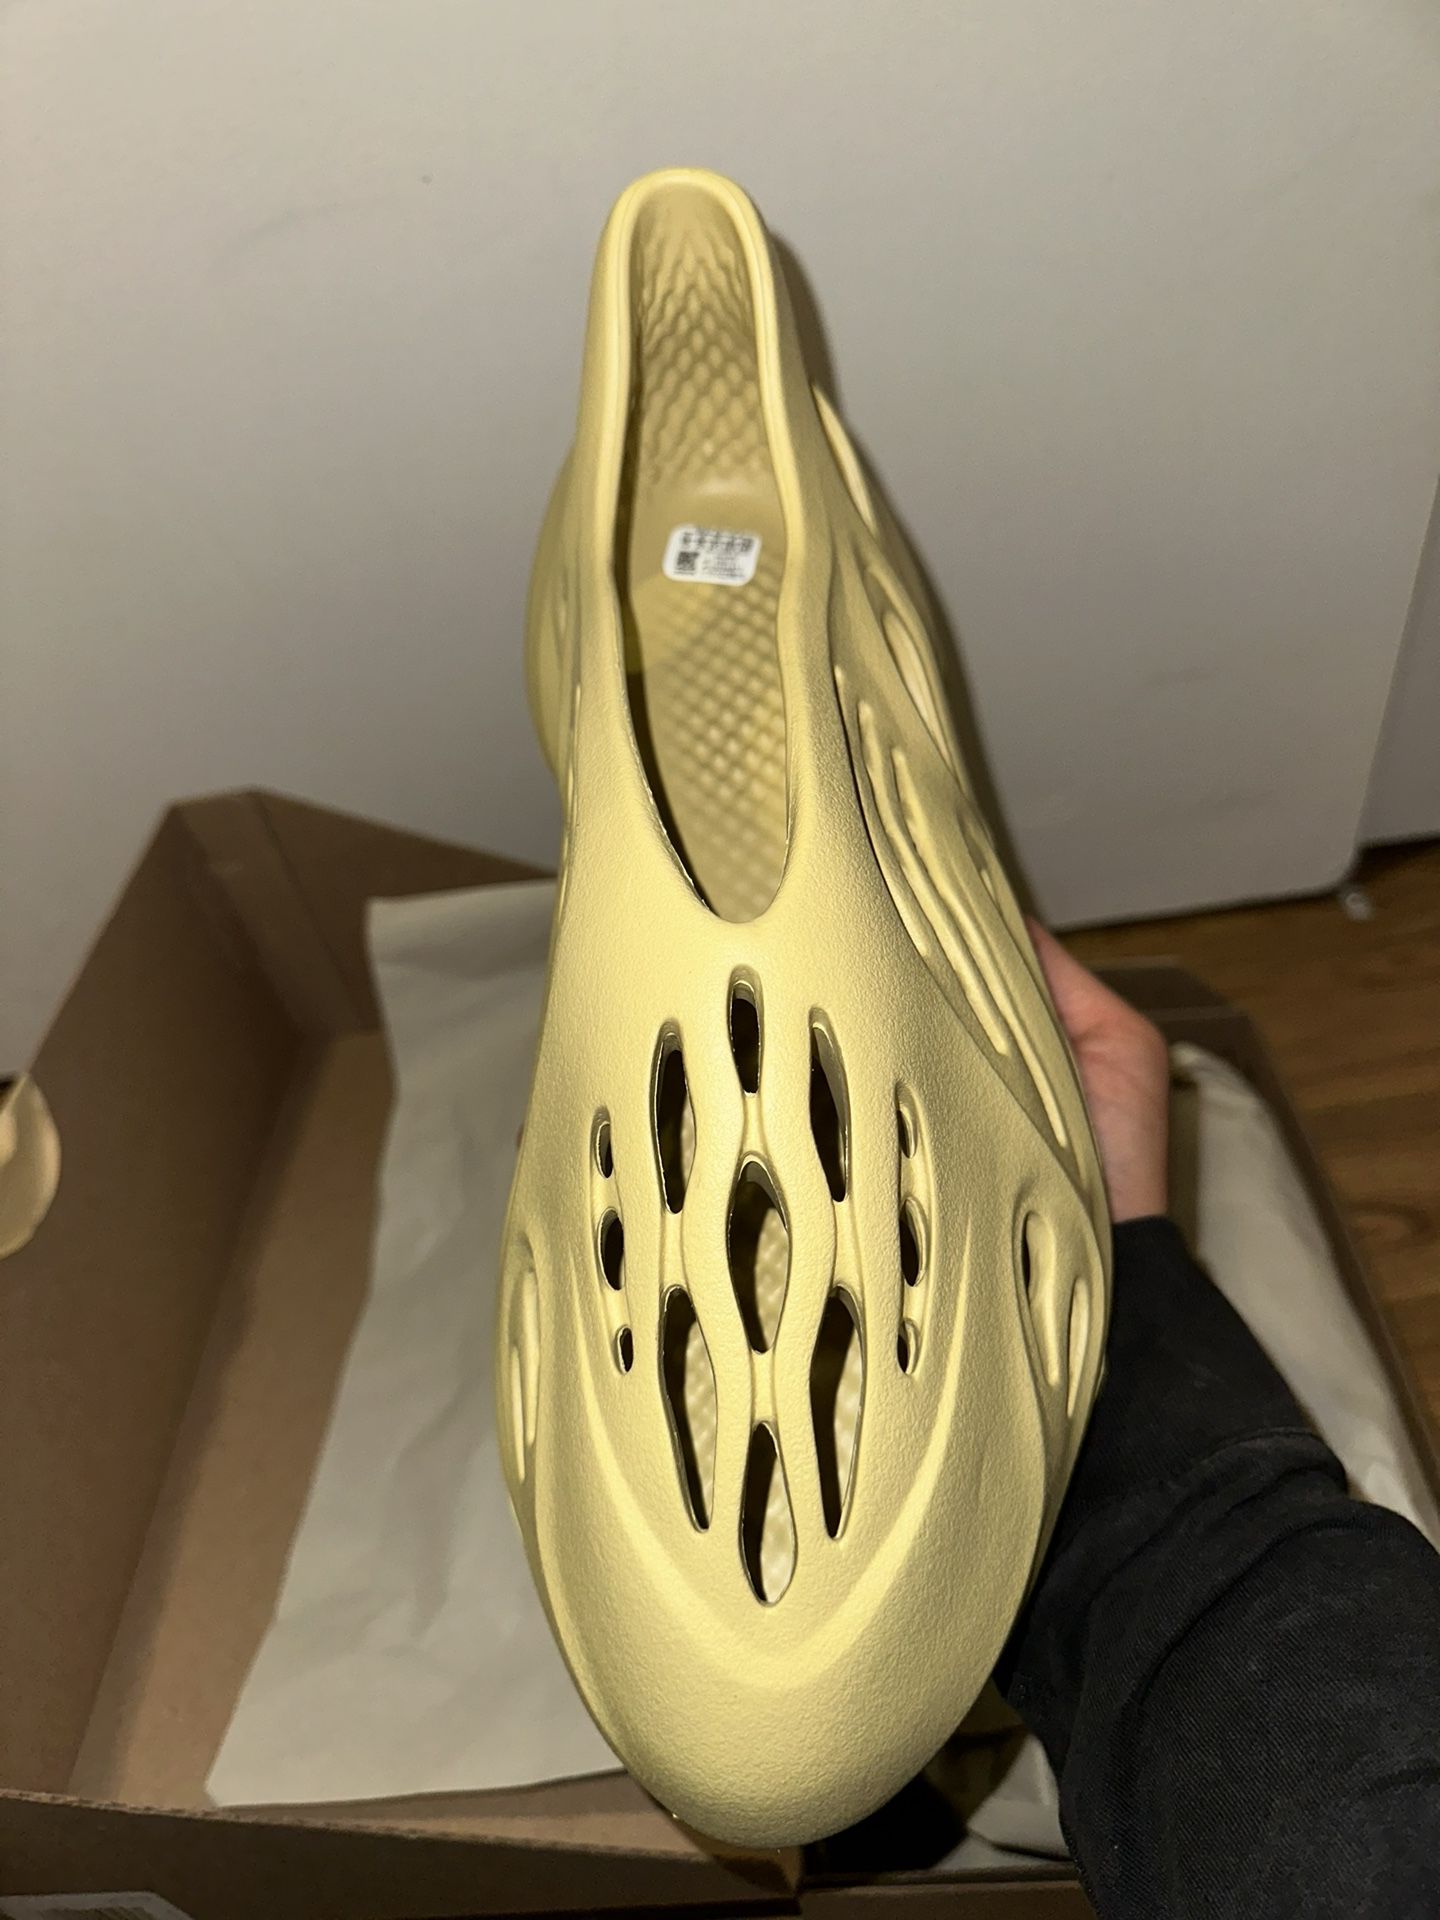 Adidas Yeezy Foam Runner Size 15